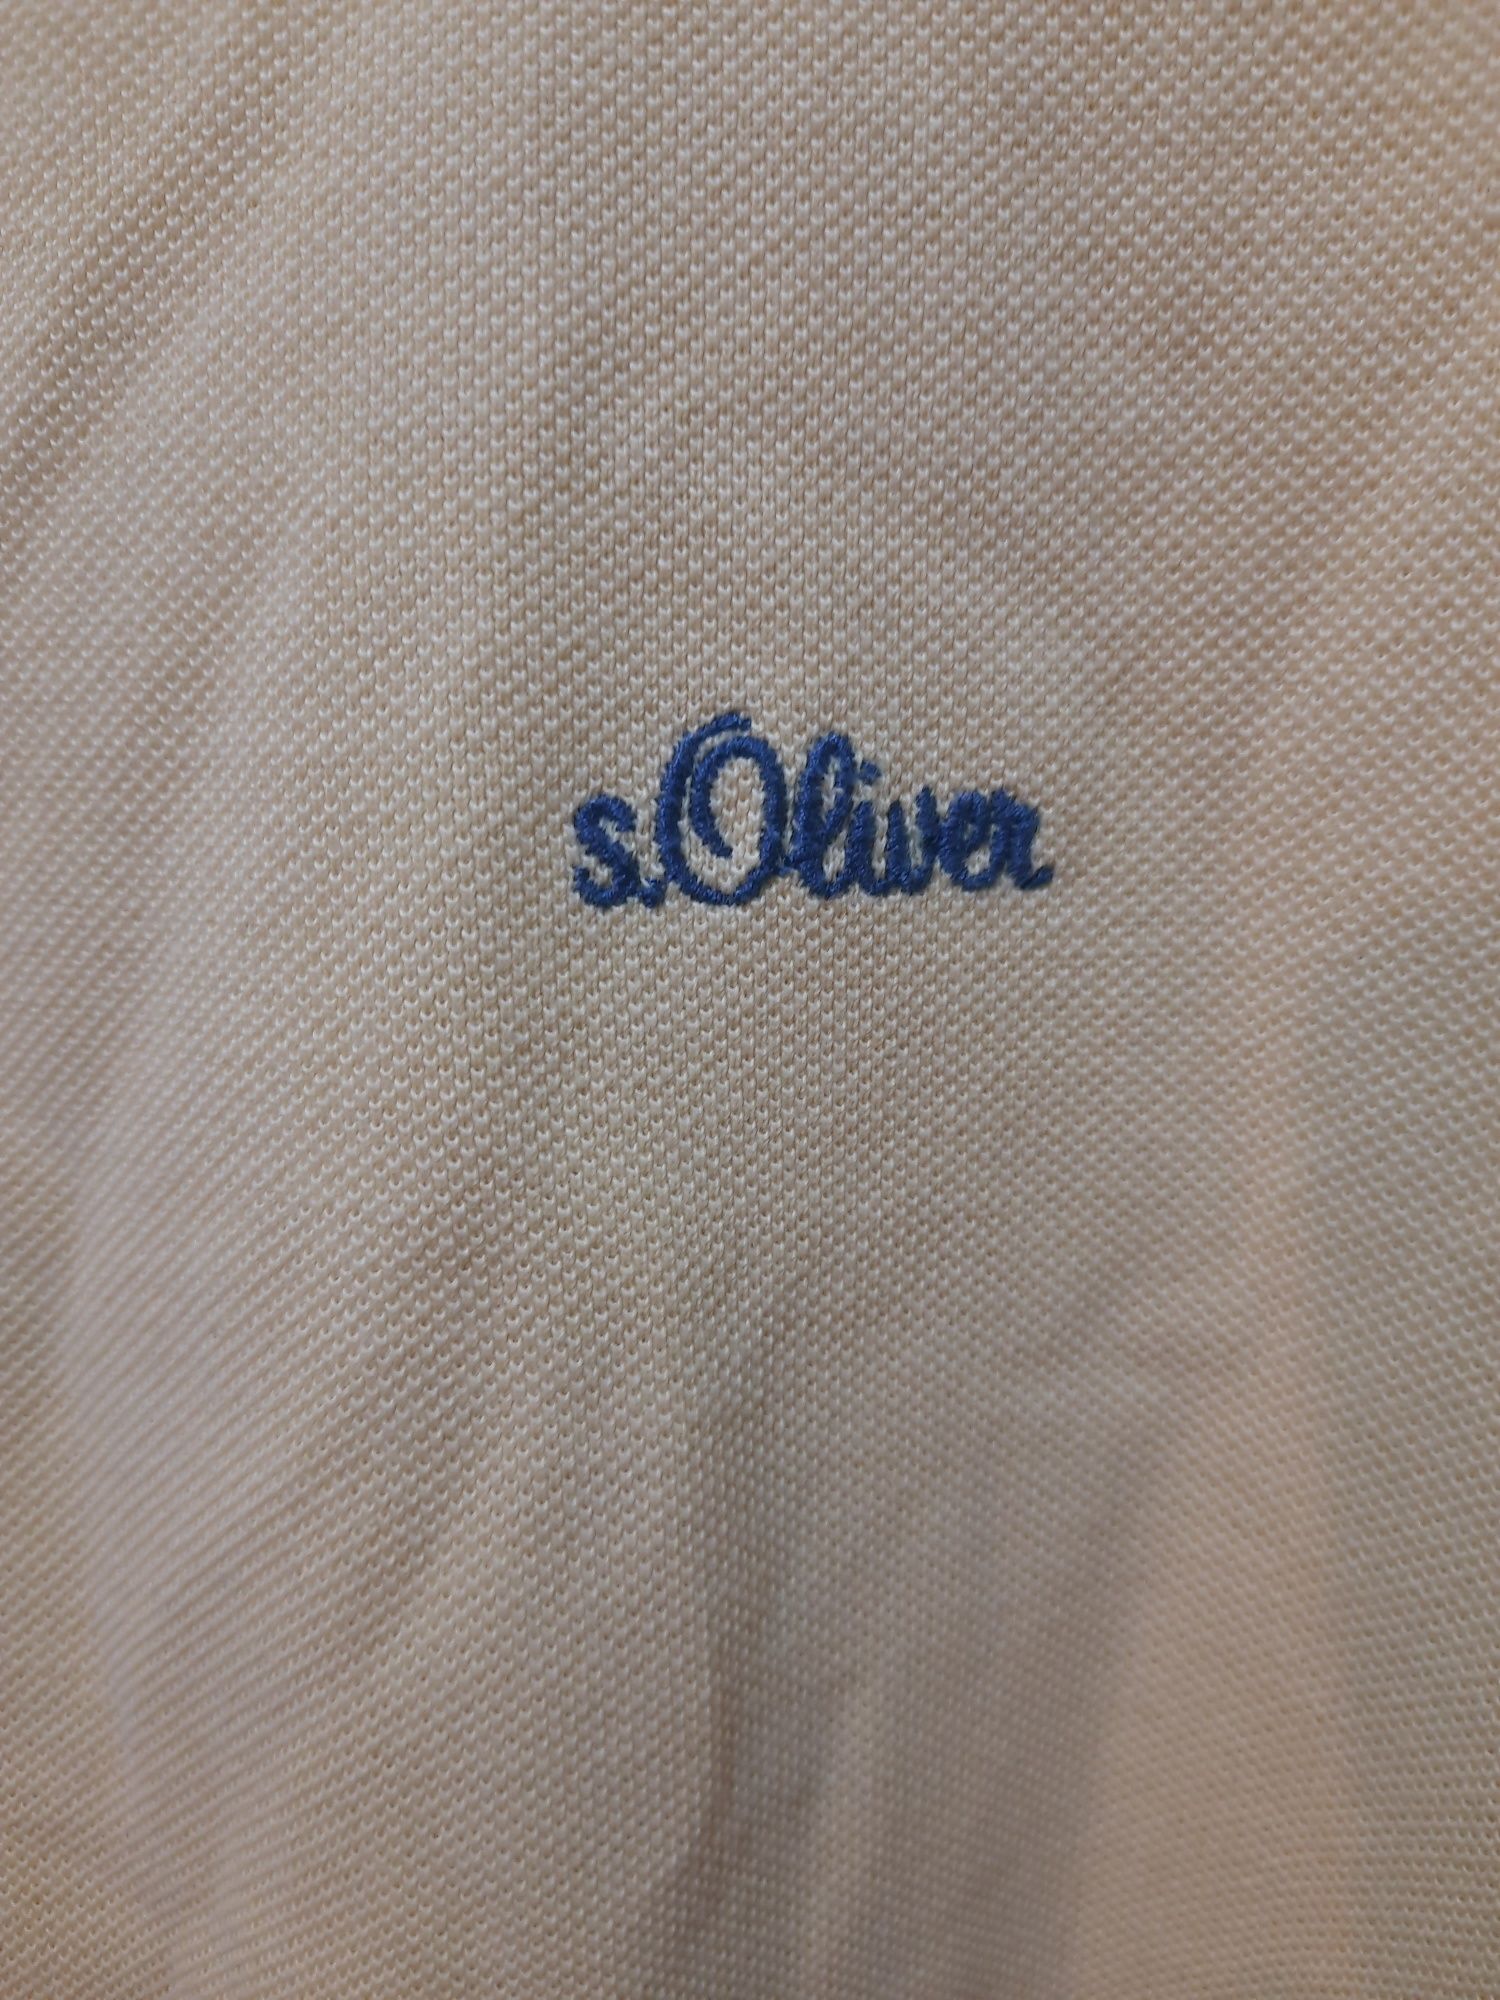 Koszulka polo, polówka męska, S.Oliver, rozmiar XL